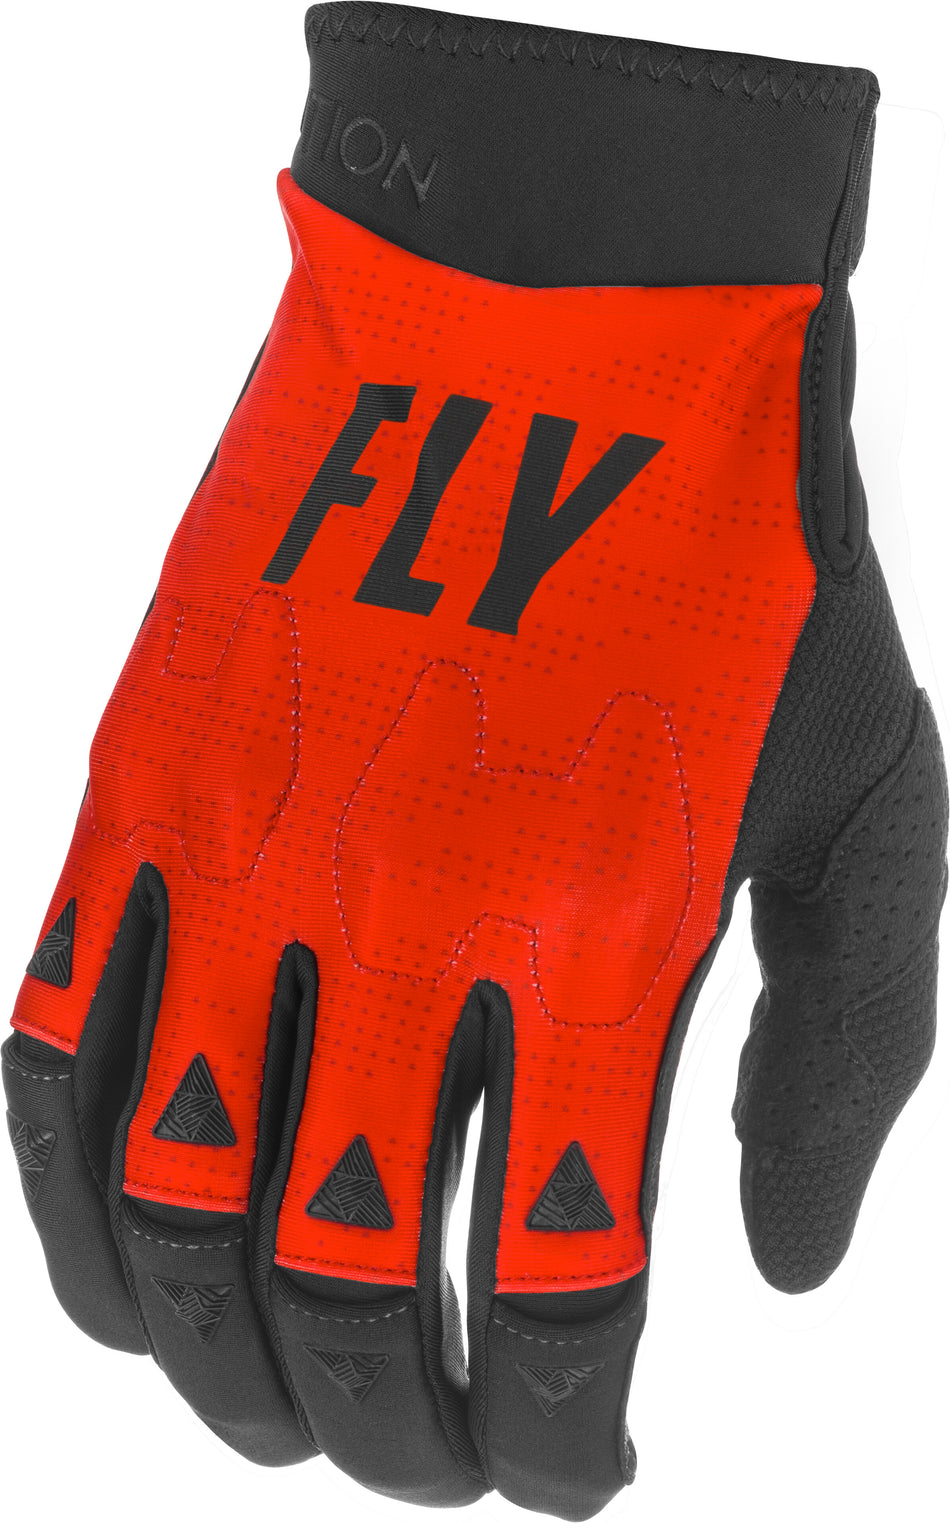 FLY RACING Evolution Dst Gloves Red/Black/White Sz 11 374-11211